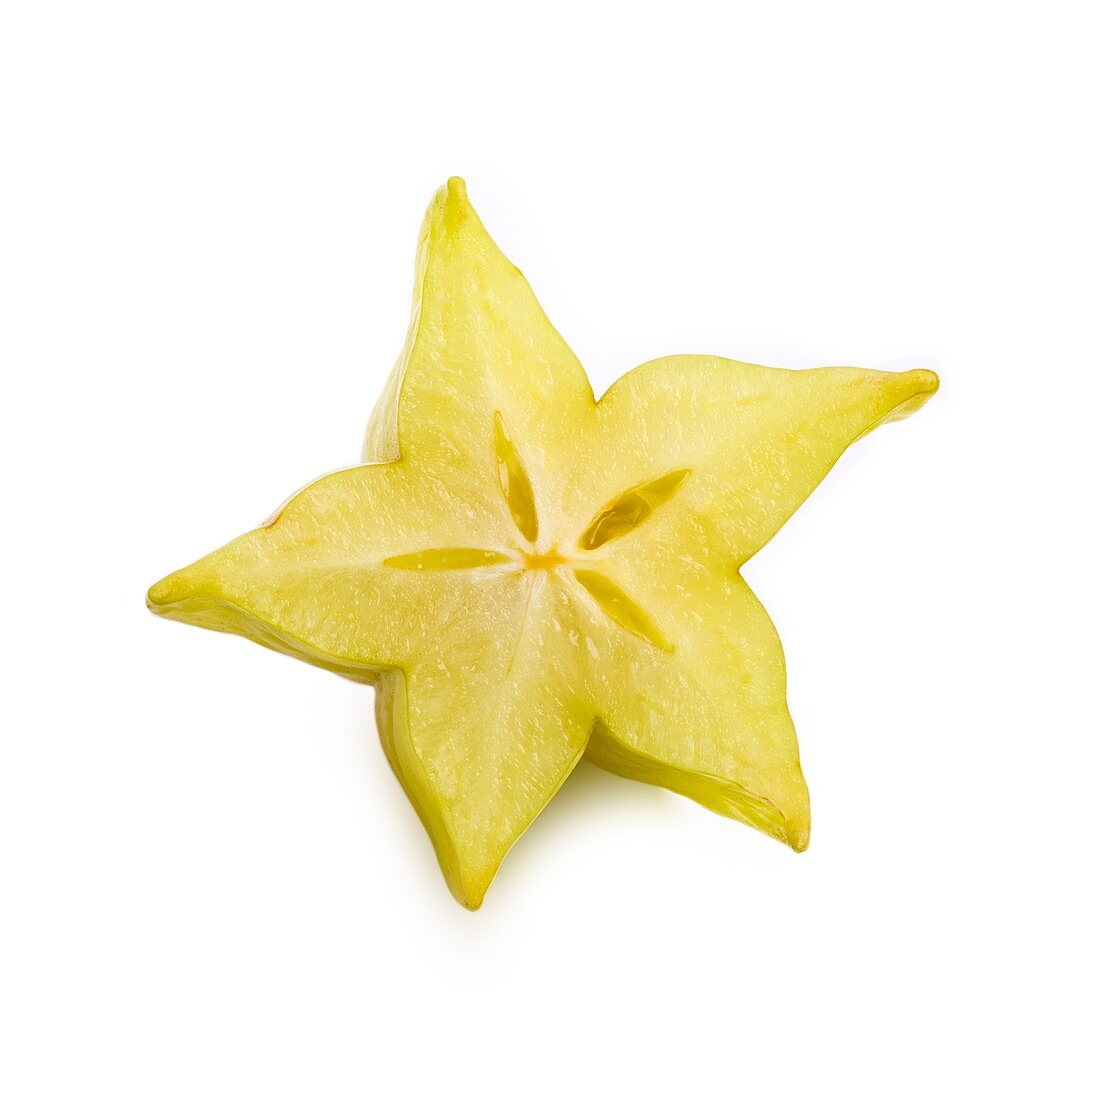 Half a starfruit